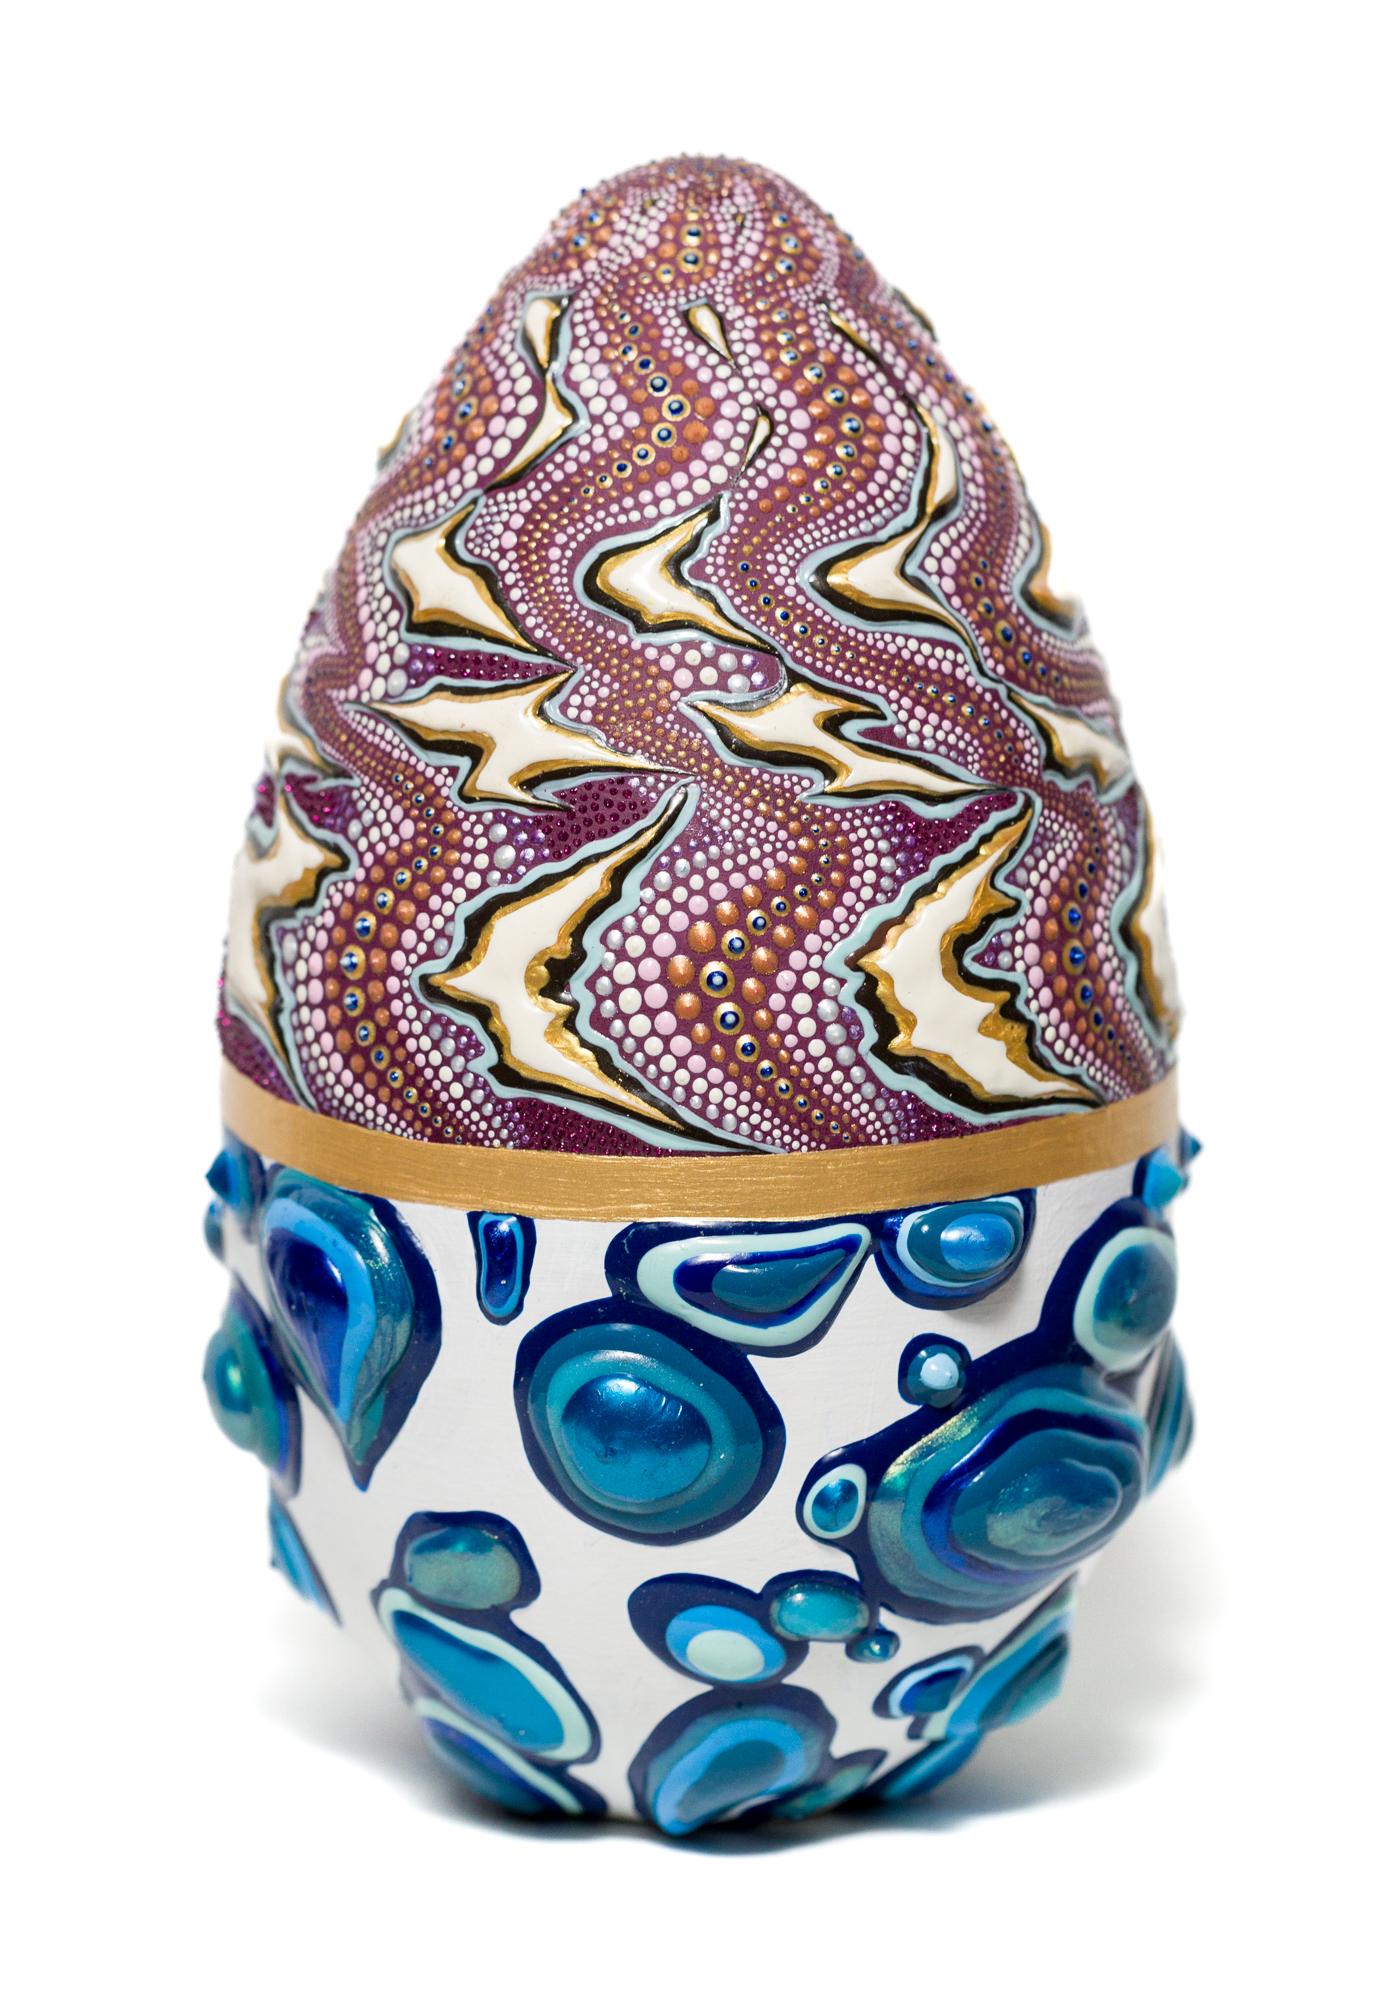 "Dries Van Notegg", Egg, Designer Brand, Pattern Design, Dimensional Paint - Sculpture by PJ Linden